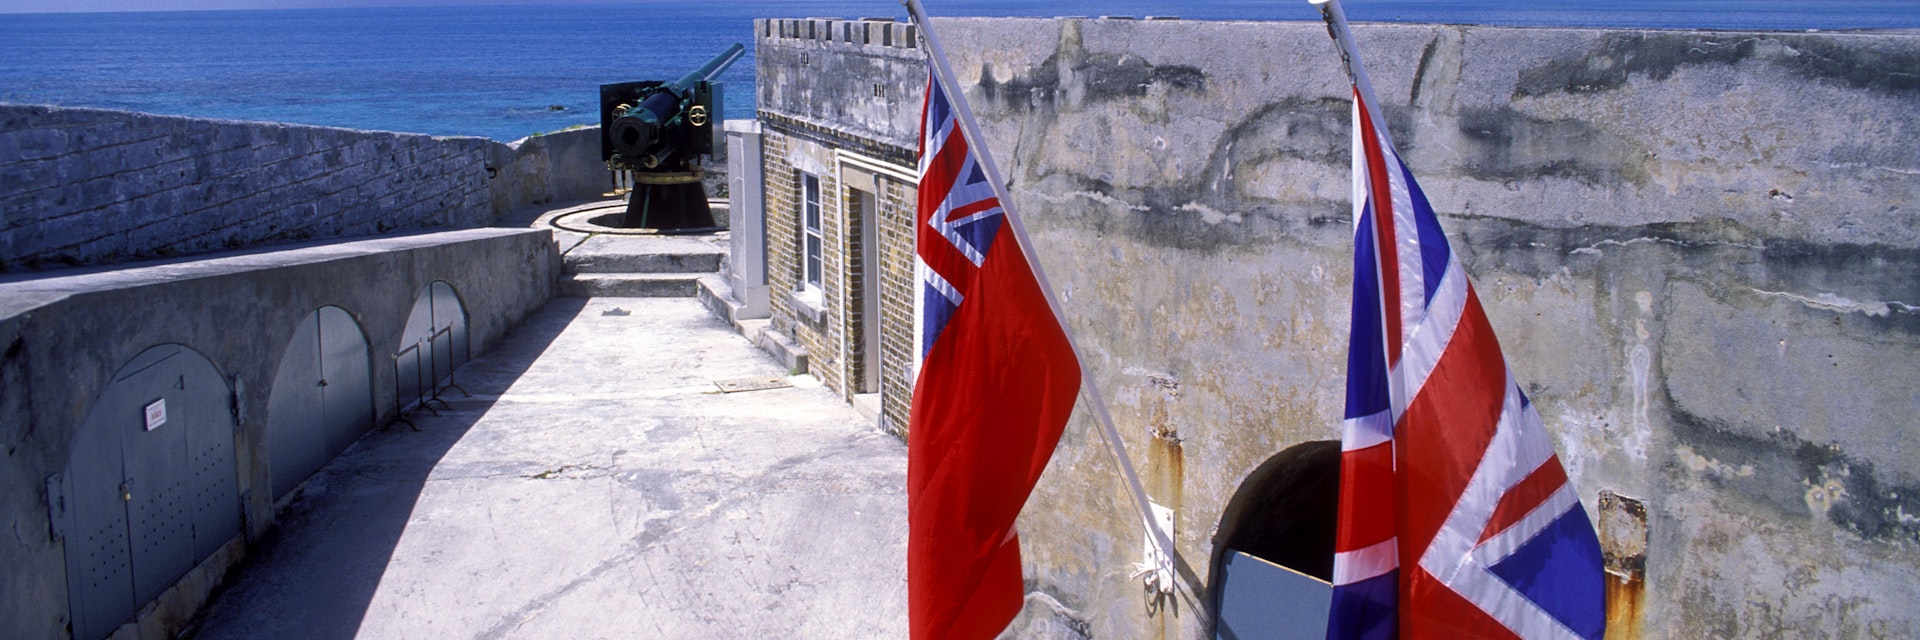 Fort St. Catherine, East End, St. George's Parish, Bermuda